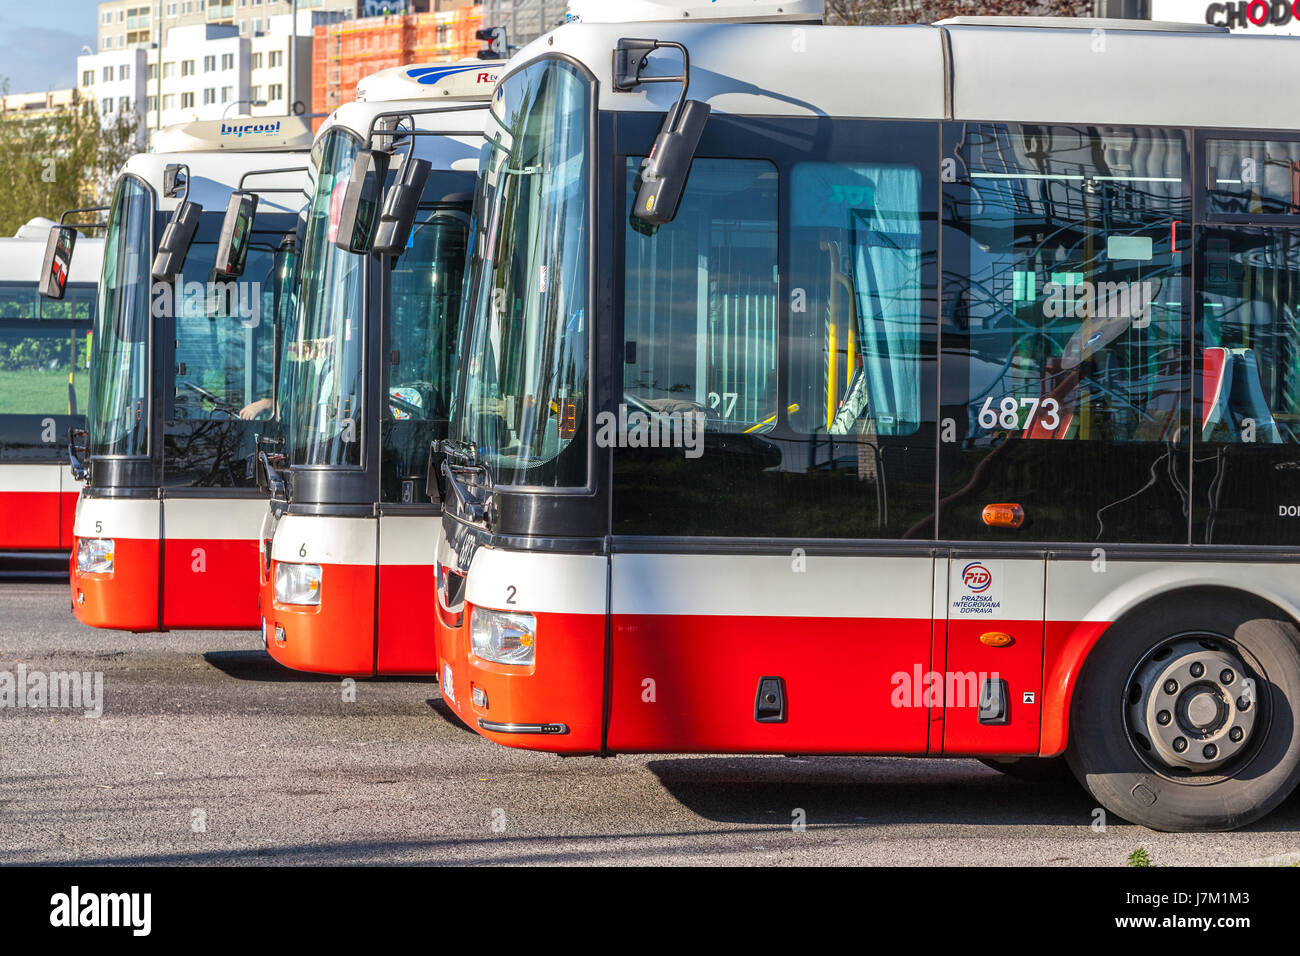 Buses of public transport, Prague, Czech Republic, Europe Stock Photo